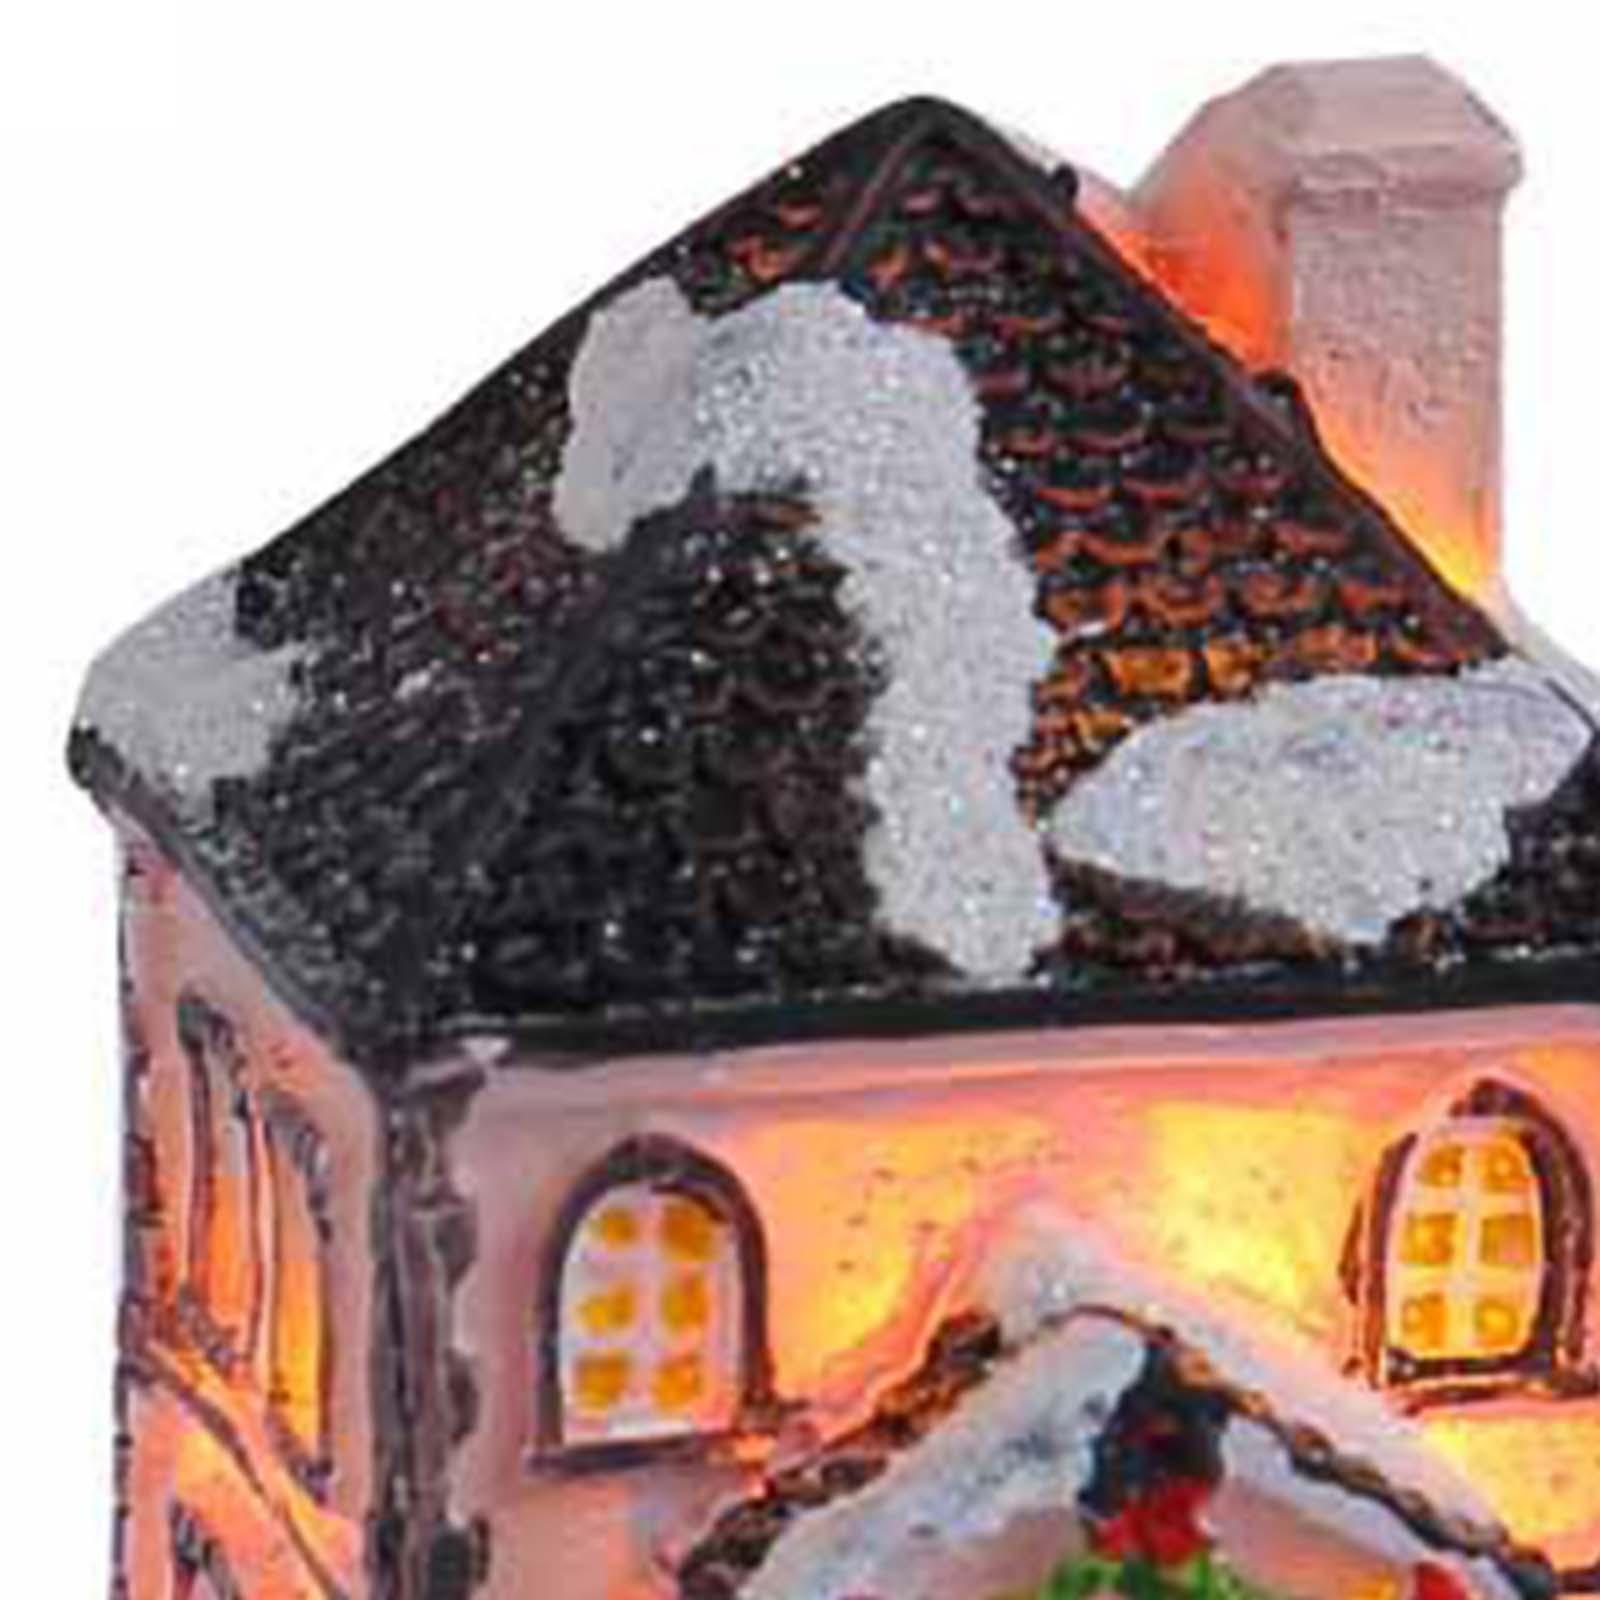 Christmas Scene Lighted House Village Miniature for Shop Window